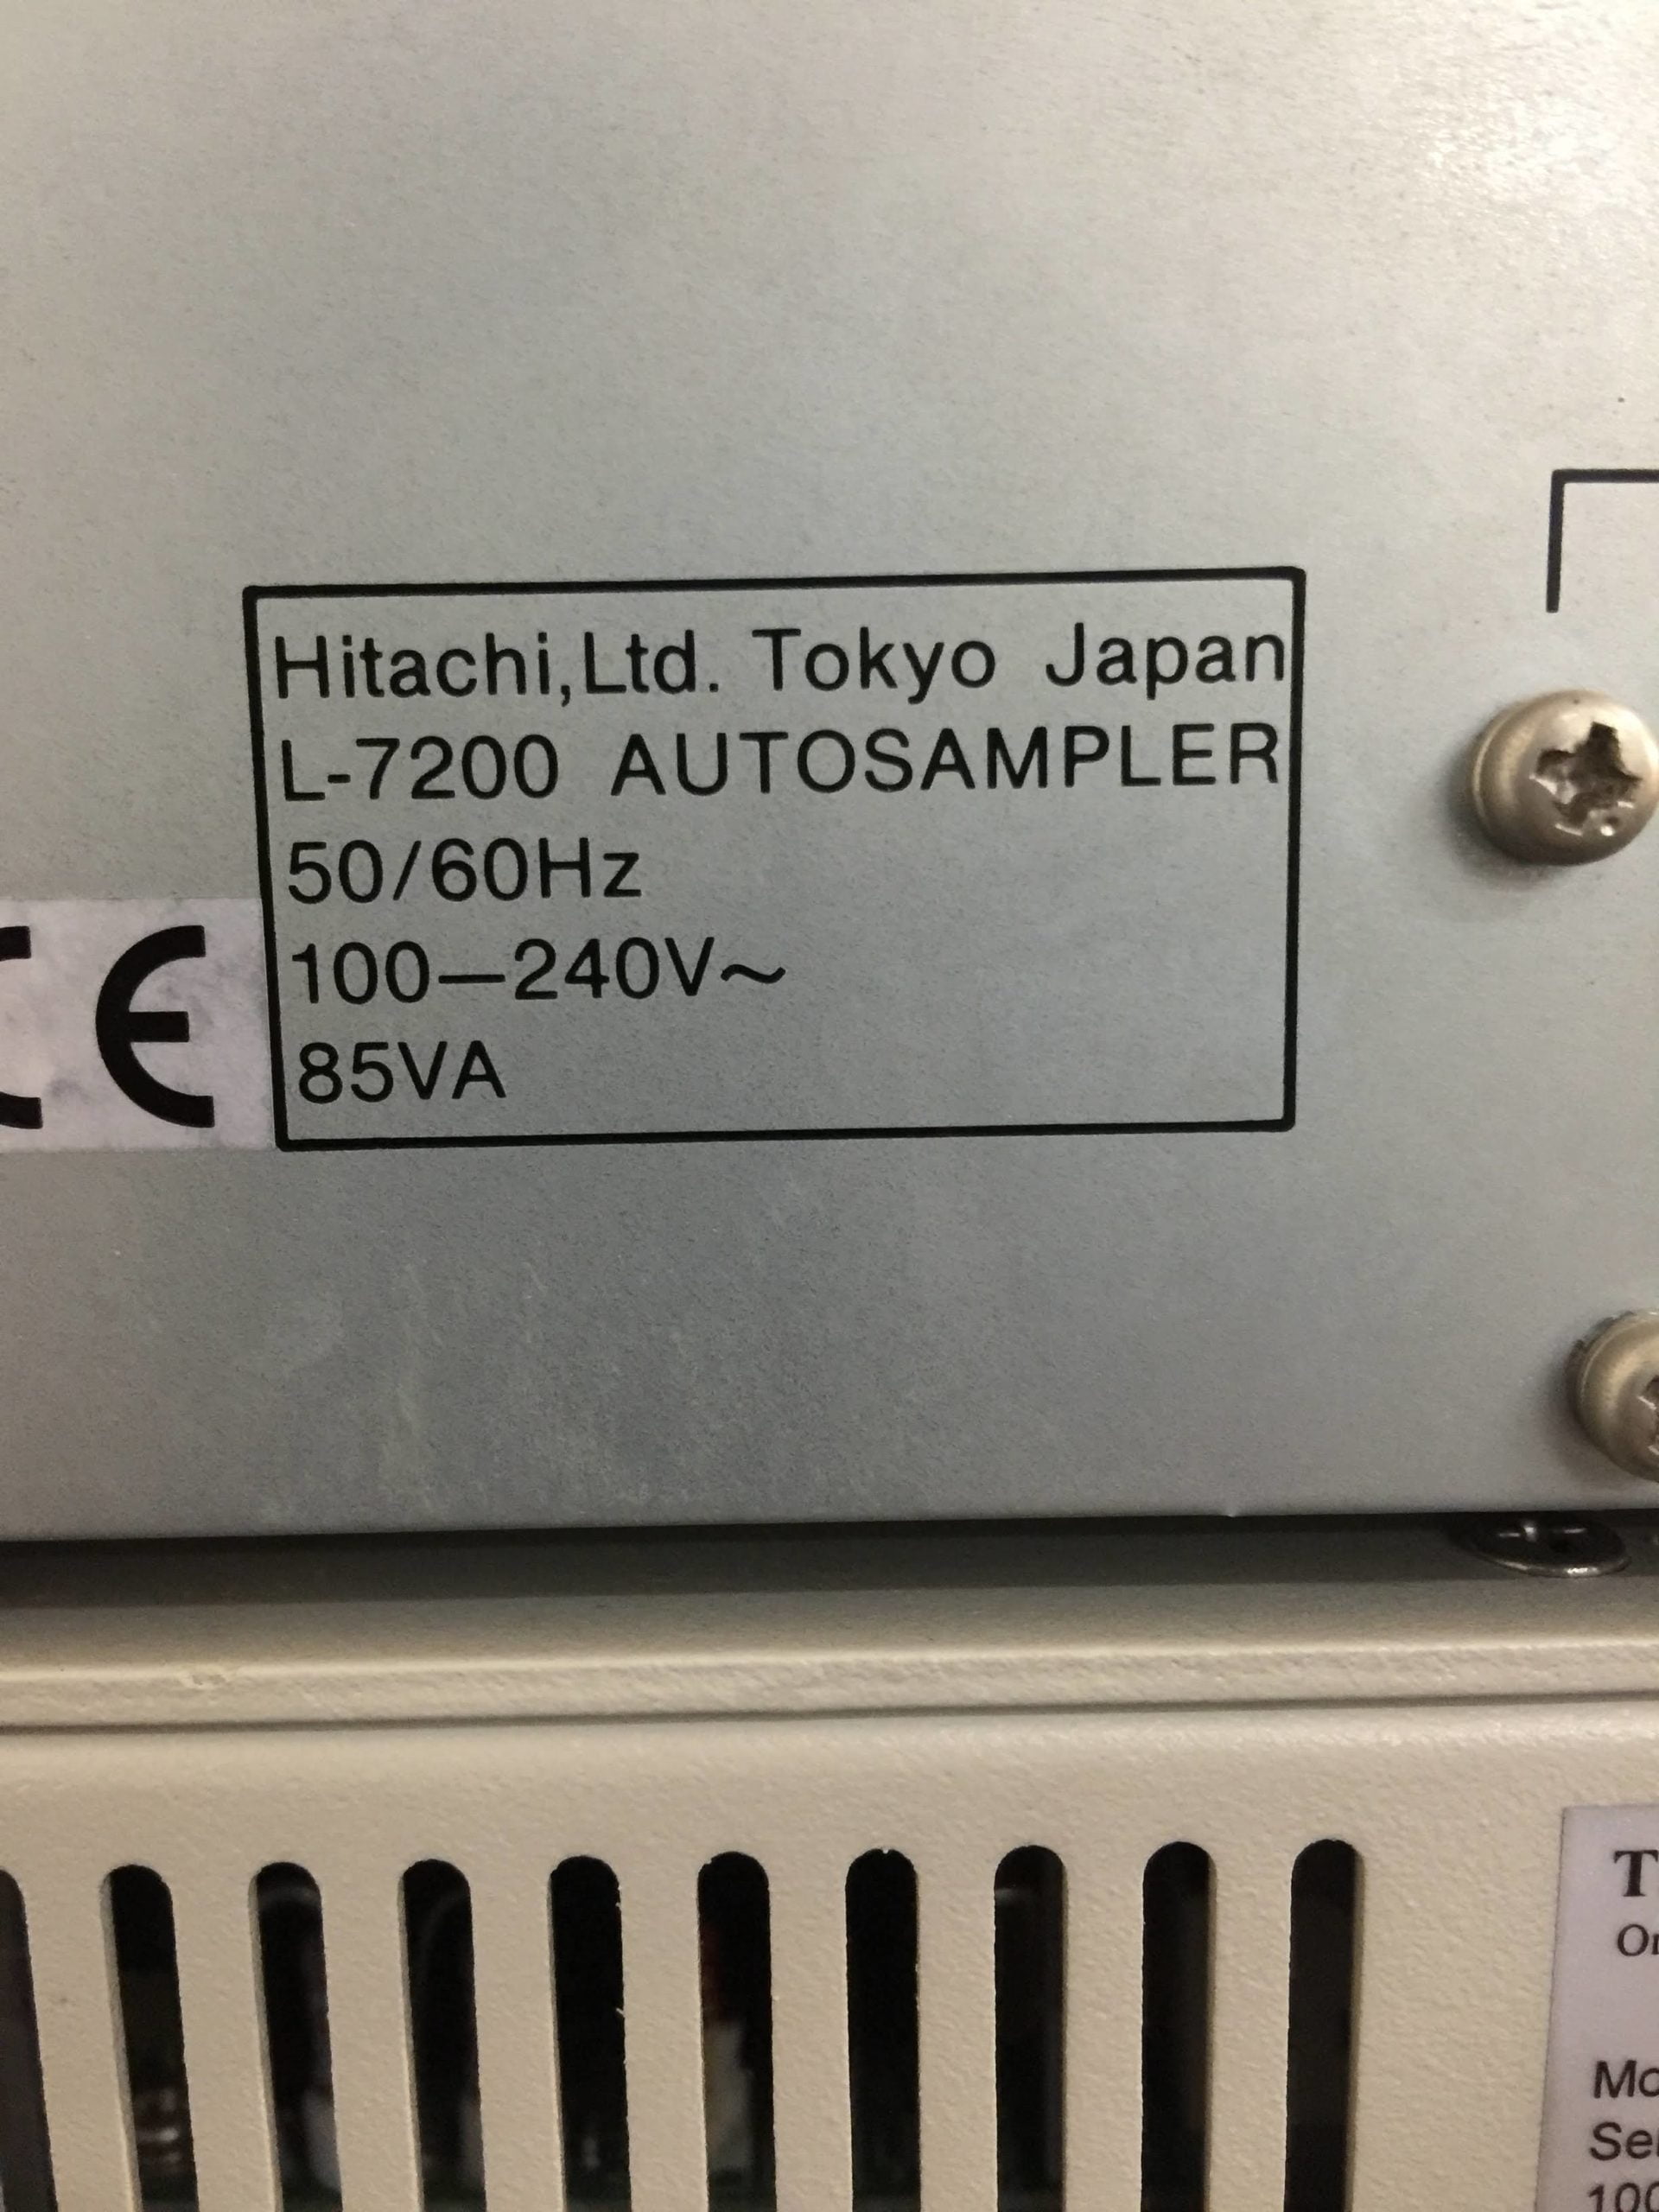 hitachi transgenomic hplc system – autosampler, pump, column oven, uv detector, channel degasser